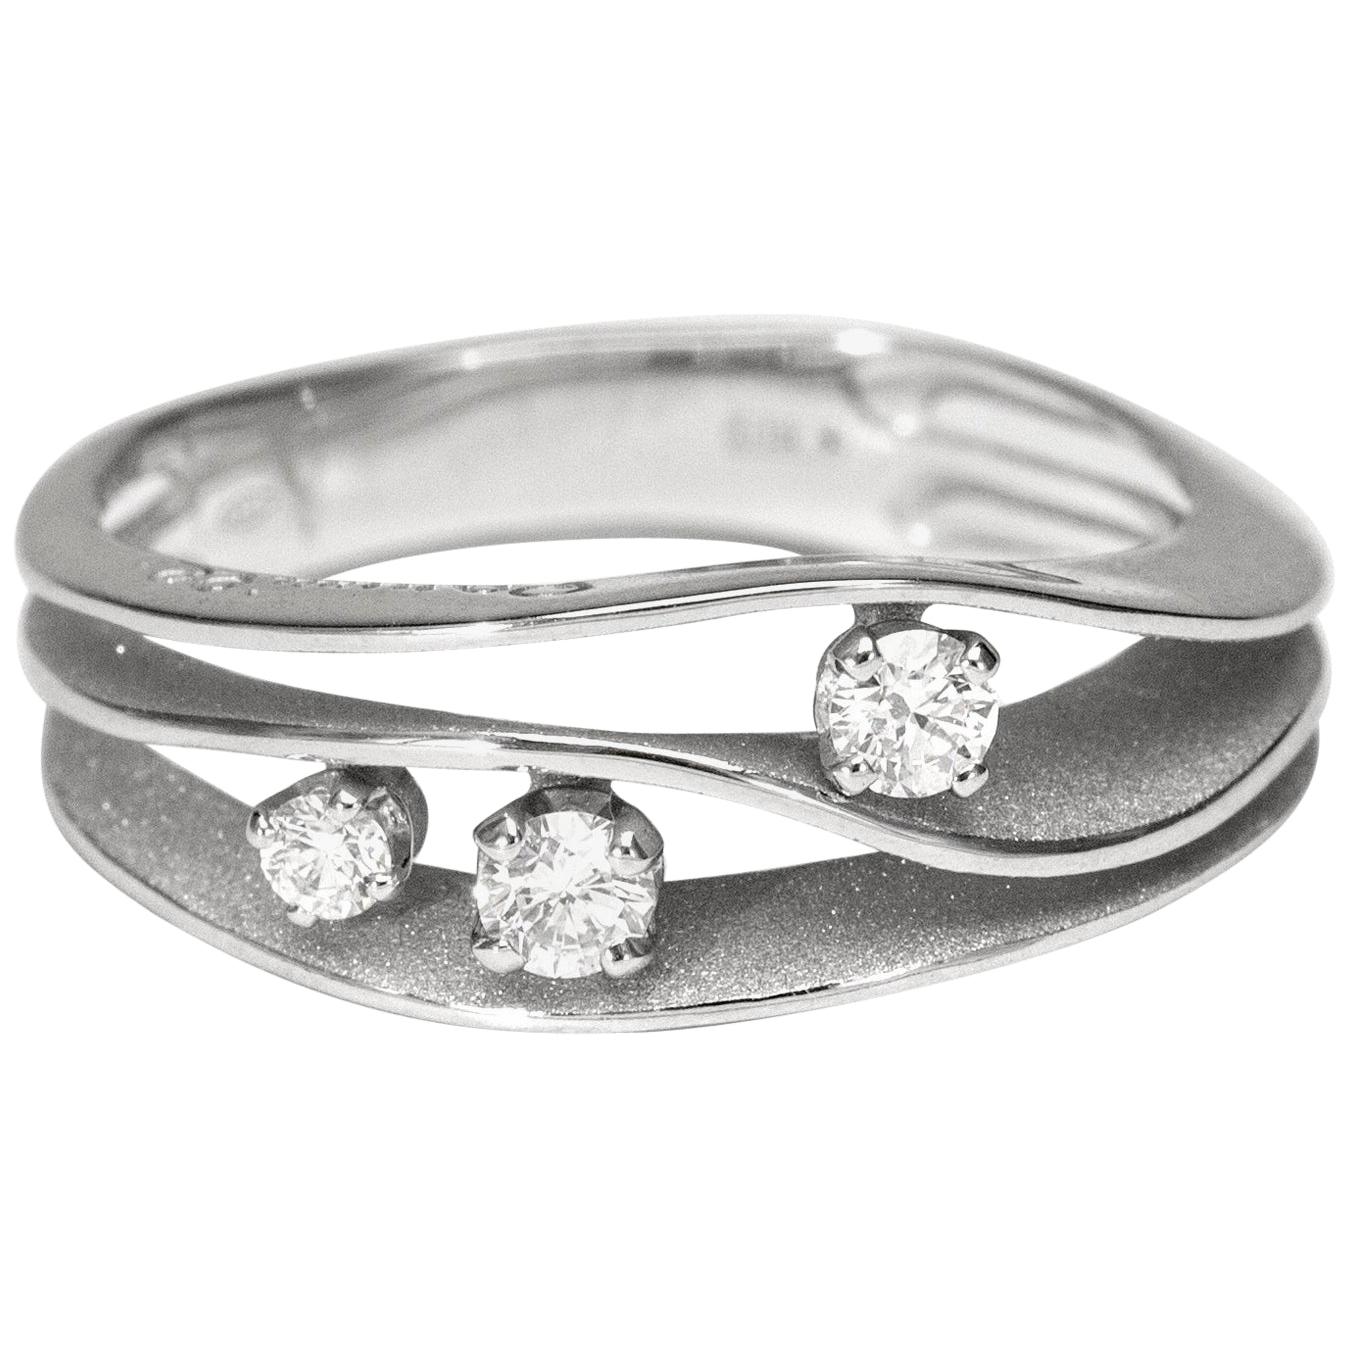 For Sale:  Annamaria Cammilli "Dune" Ring with Three Diamonds in 18 Karat White Ice Gold